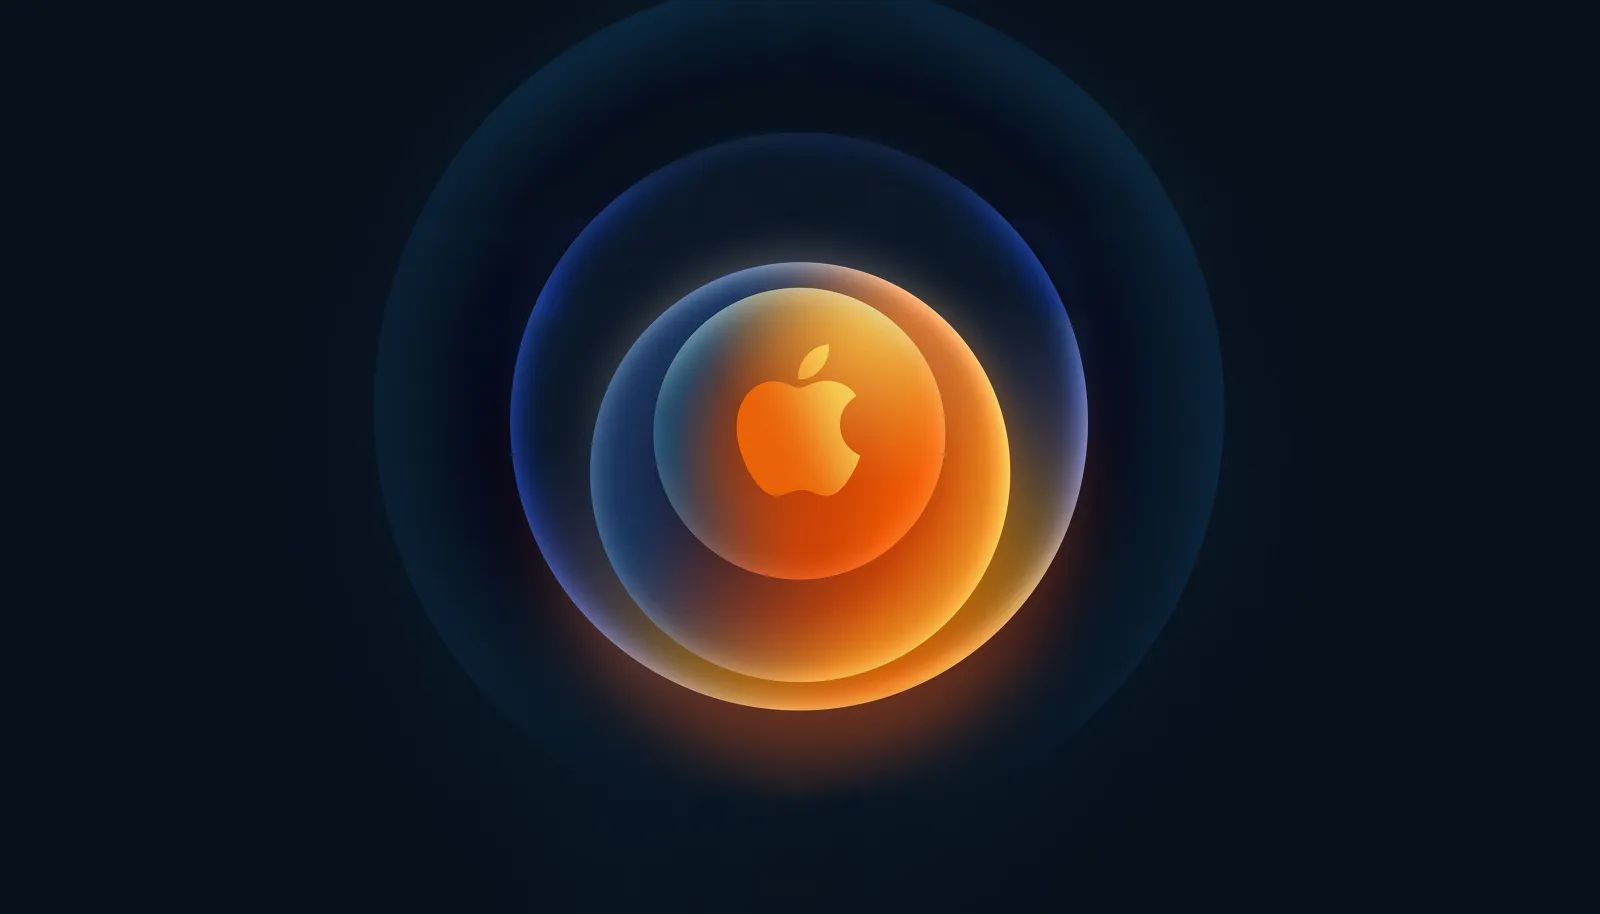 iFeed Talks - Antevisão do evento "Hi, Speed" da Apple